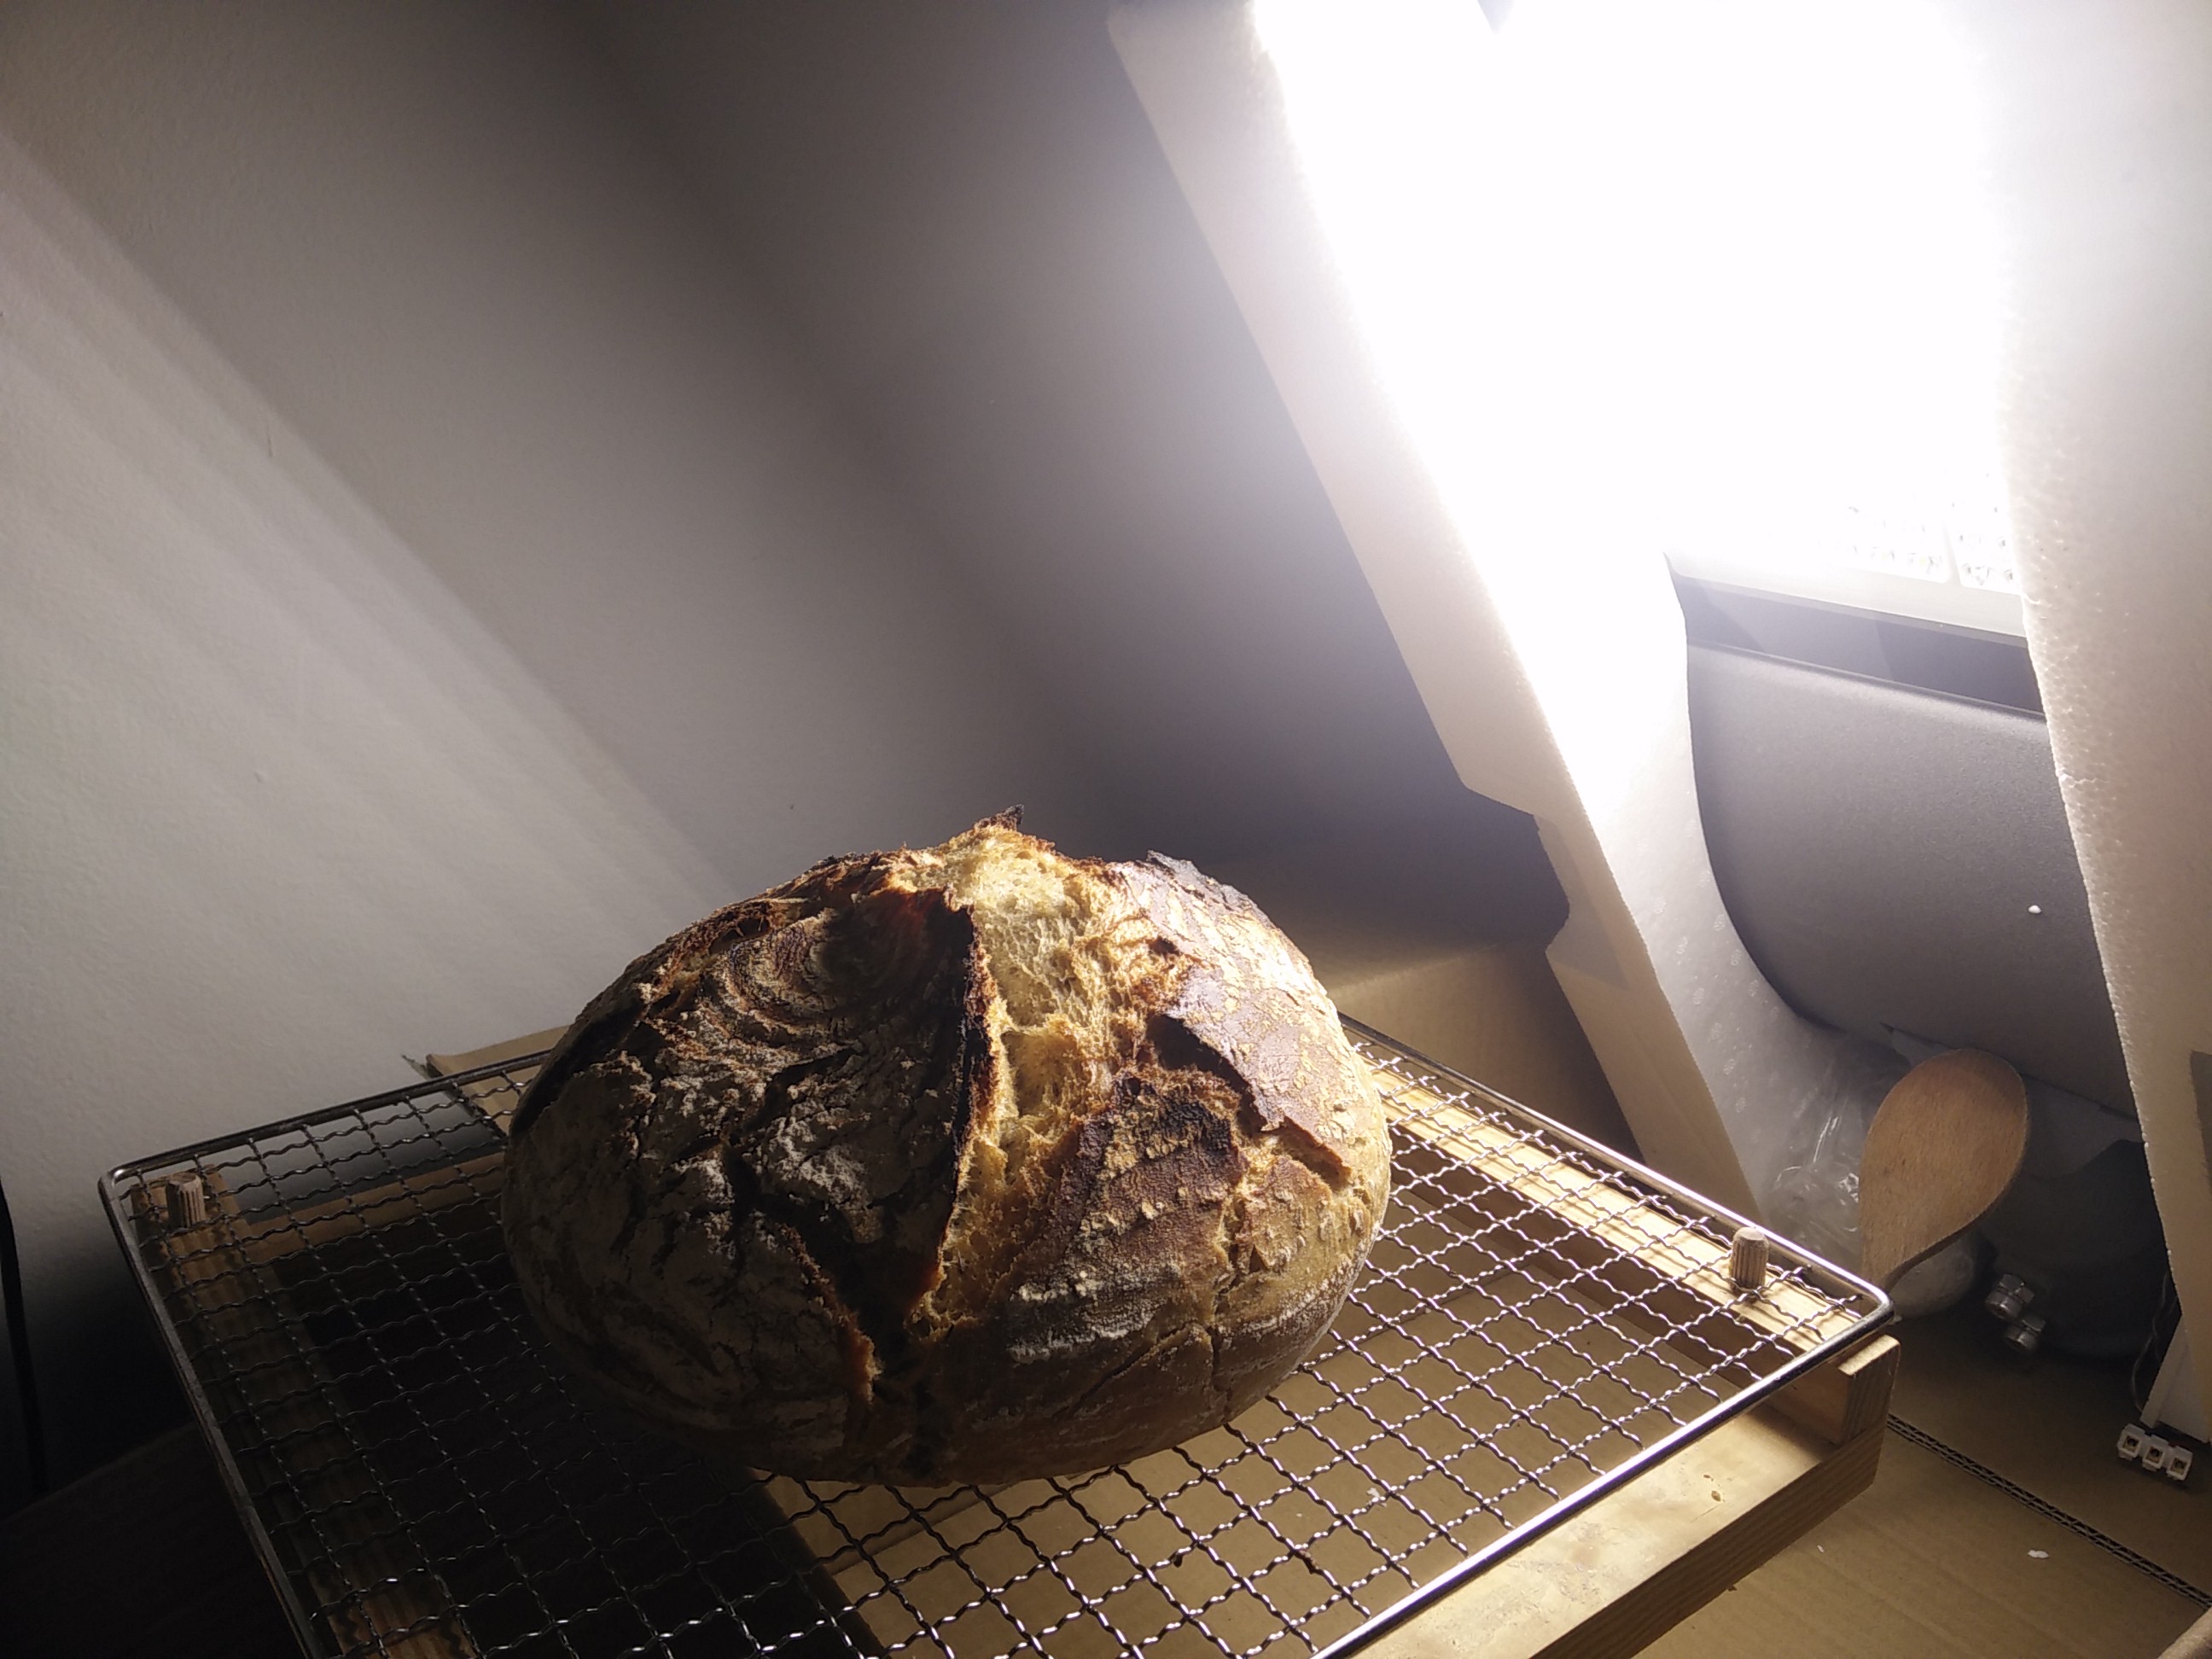 Bread photo data/2020-04-27/2020-04-27%2020.58.44.jpg